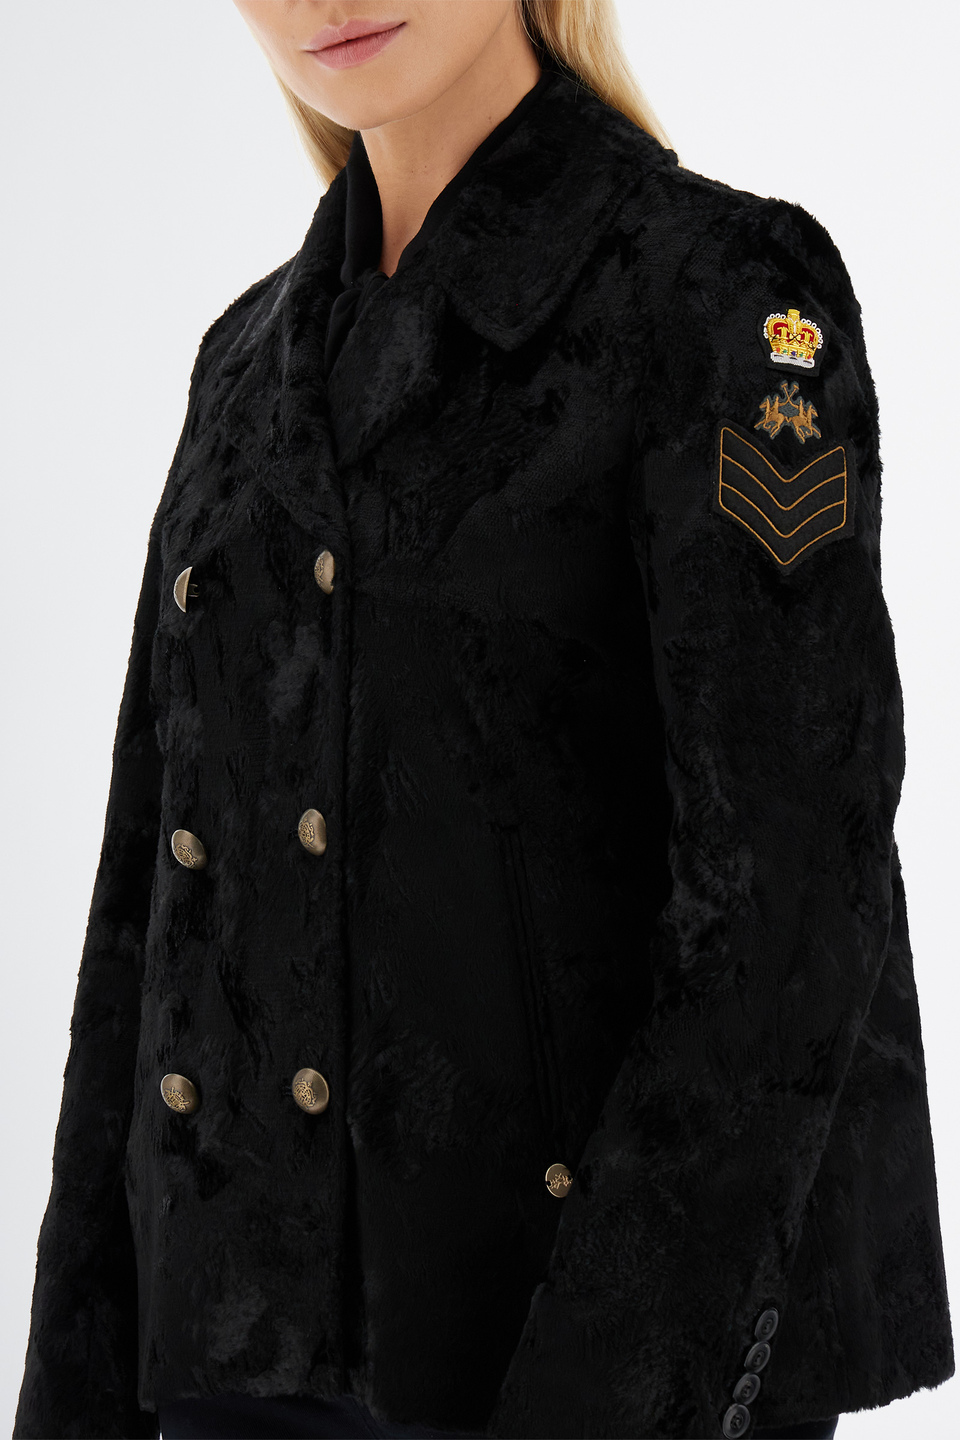 Women’s Long Sleeve England Jacket with Fur | La Martina - Official Online Shop